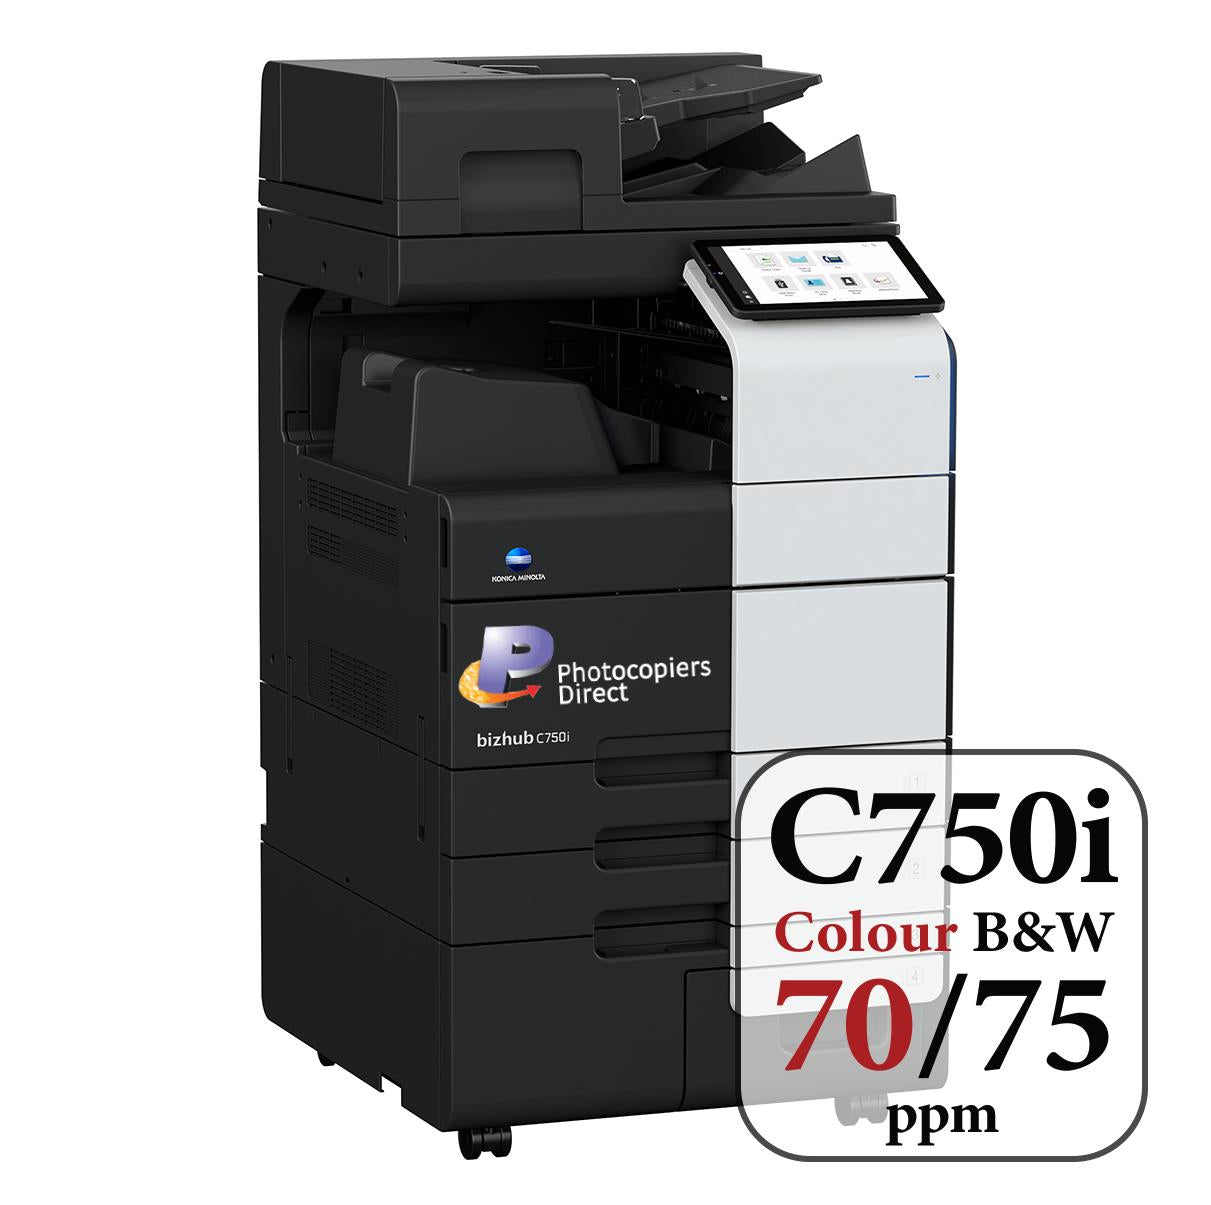 Konica Minolta bizhub C750i A3 Colour Laser Copier Printer MFD Lease Rental Price Offers Front View